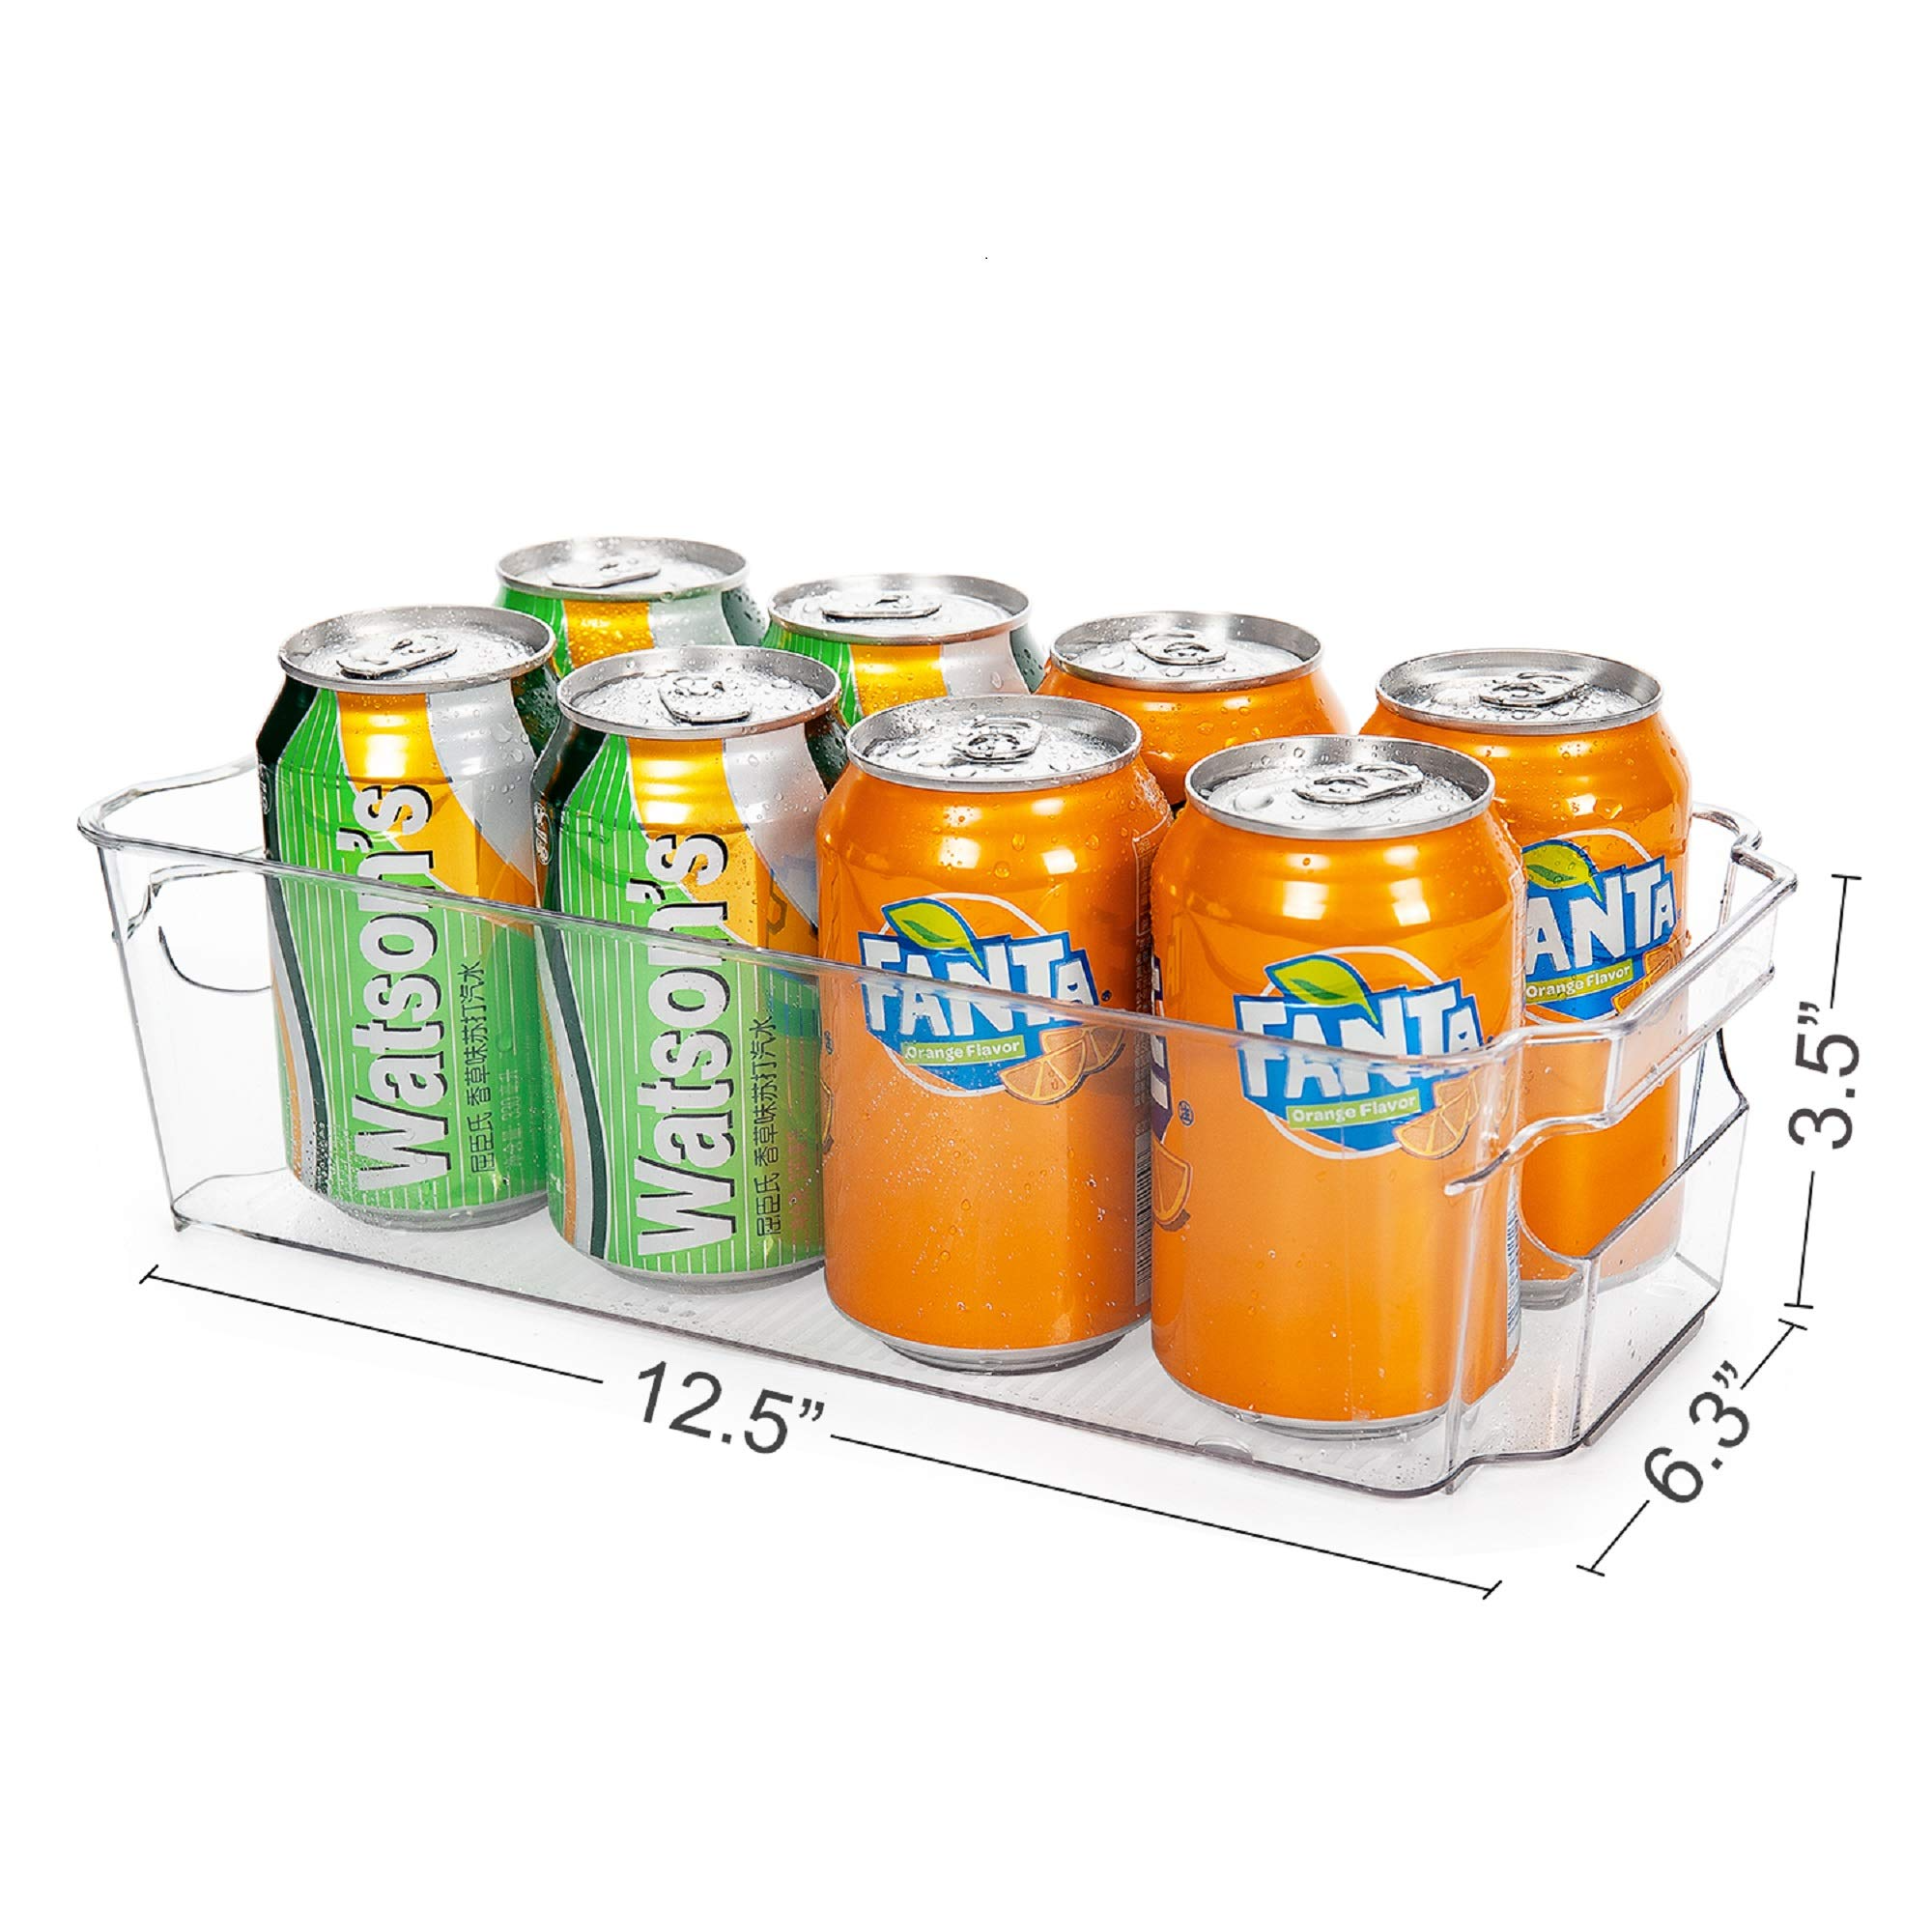 HOOJO Refrigerator Organizer Bins - 4pcs Clear Plastic Bins For Fridge,  Freezer, Kitchen Cabinet, Pantry Organization, BPA Free Fridge Organizer